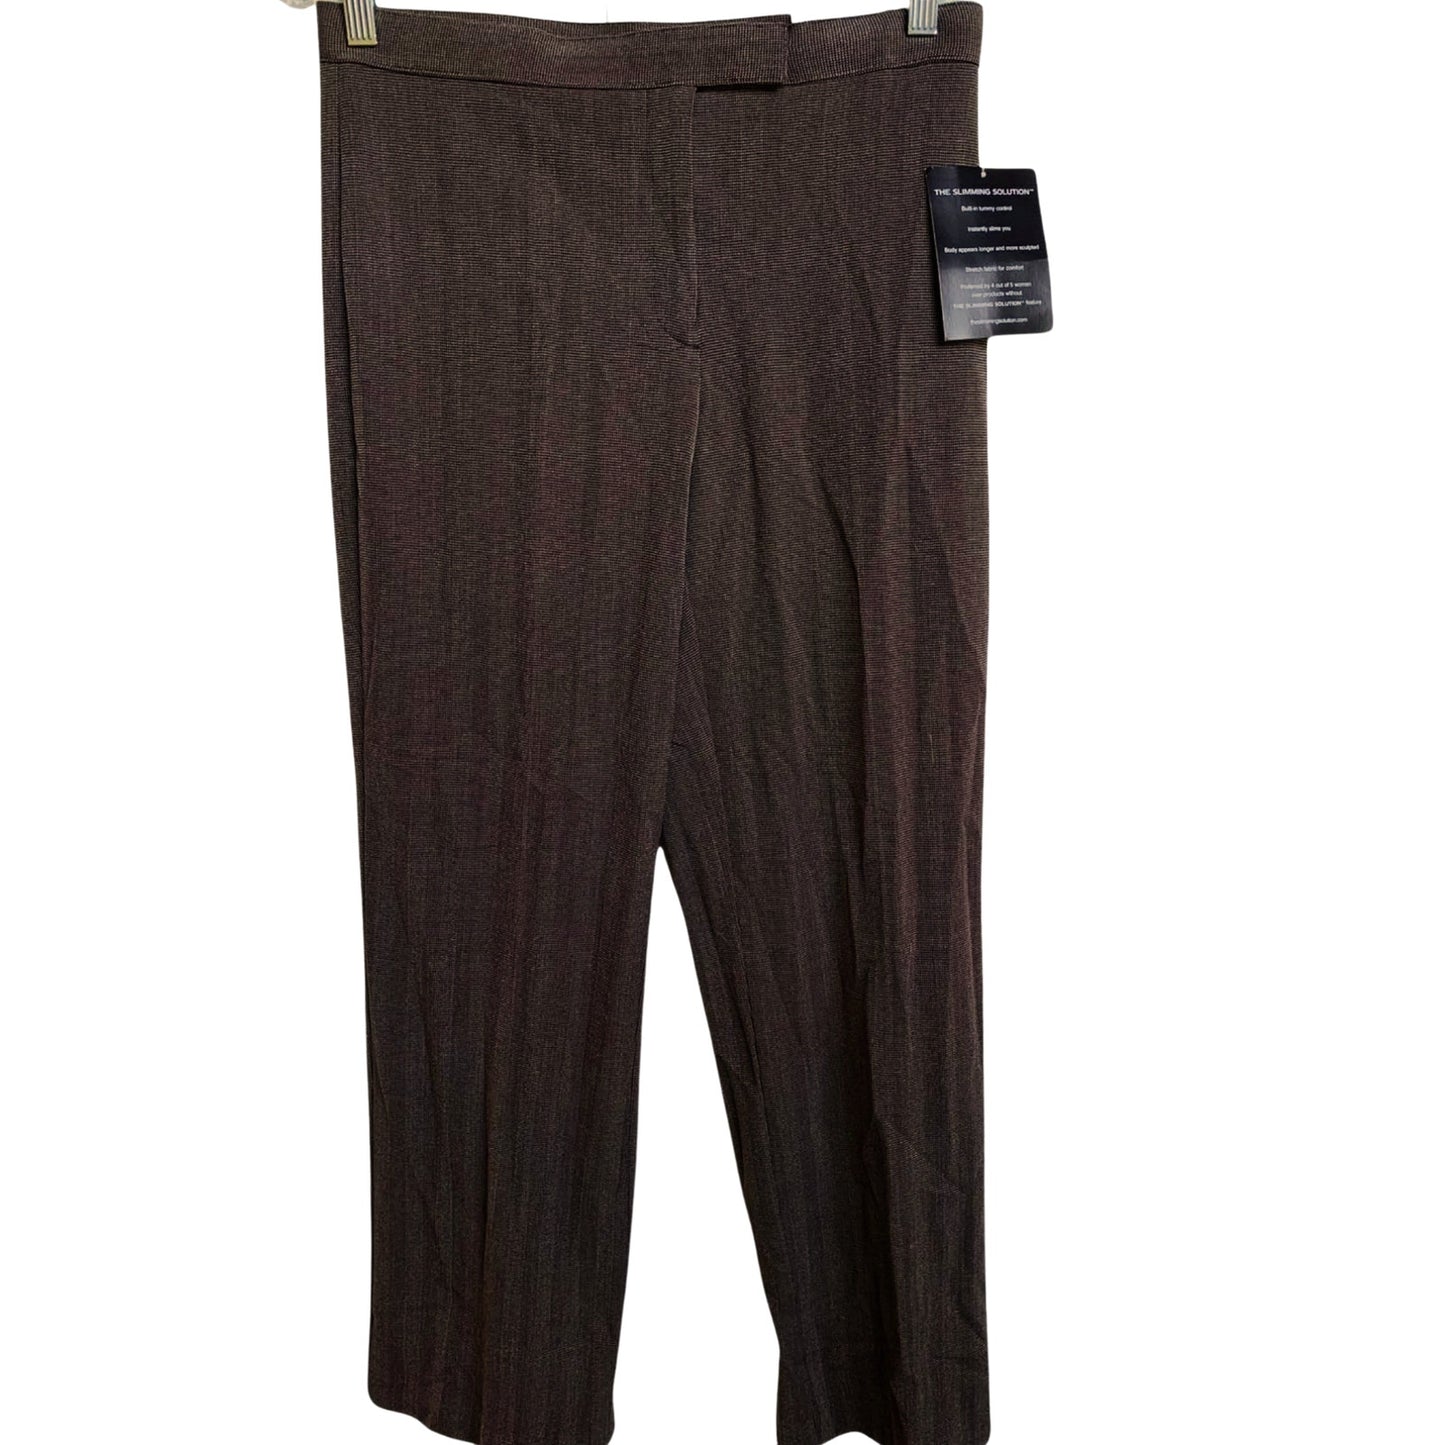 Sag Harbor Woman Plus Size Slimming Pants Dark Brown NWT 24W